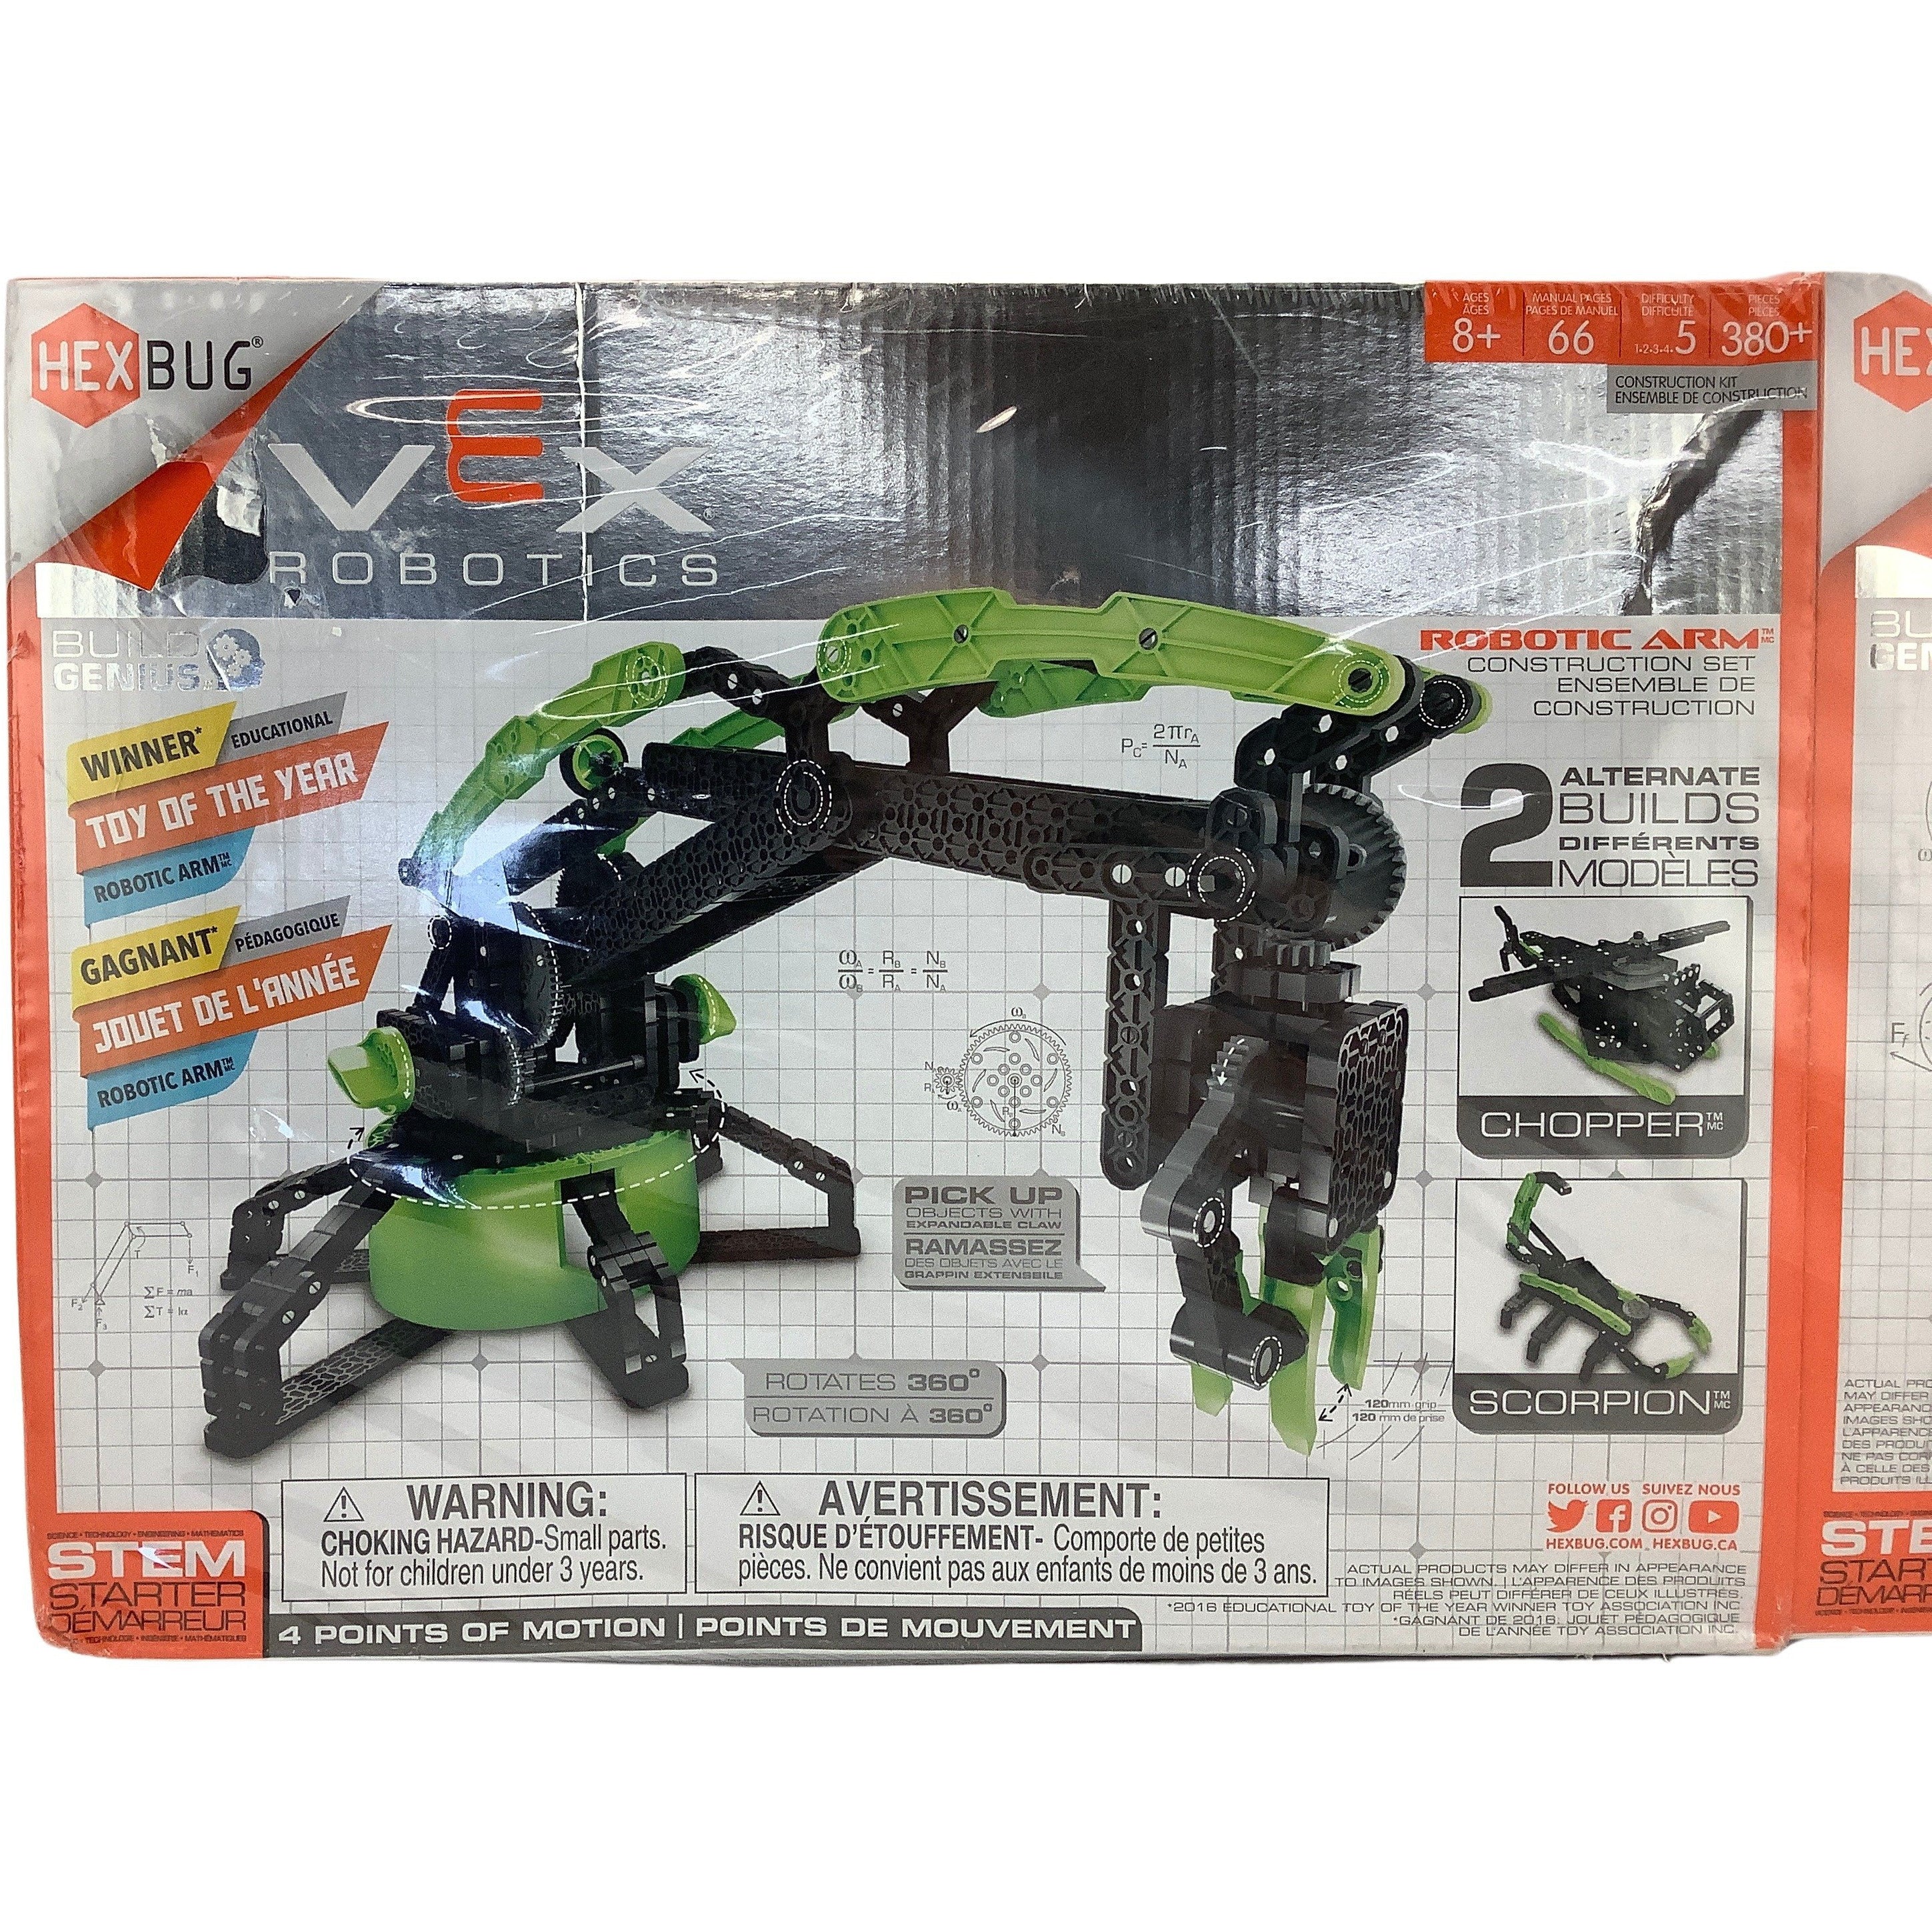 HexBug Vex Robotics 2 Pack: Robotic Arm and Hook Shot: Construction Kit **DEALS**